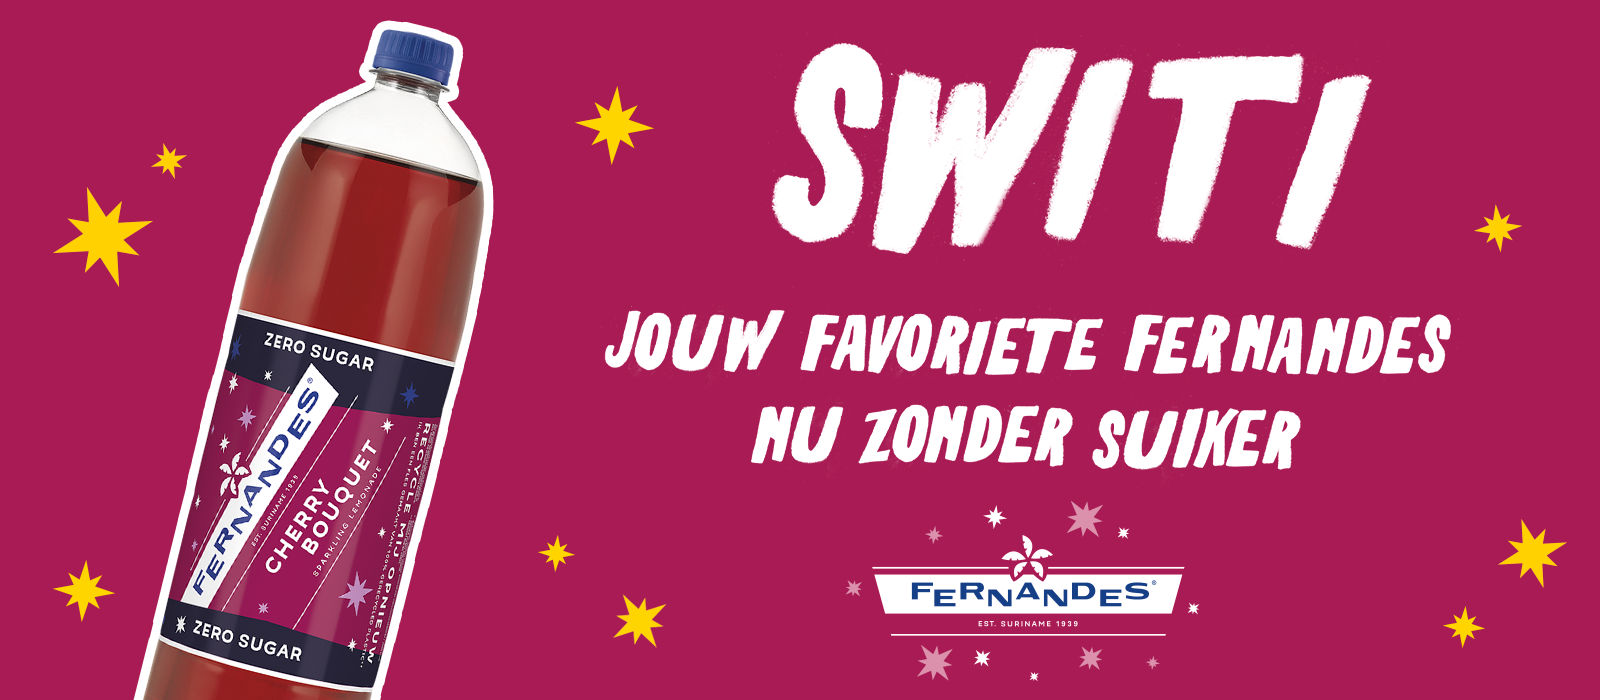 Een roze bannerafbeelding met SWITI Fernandes-drankje